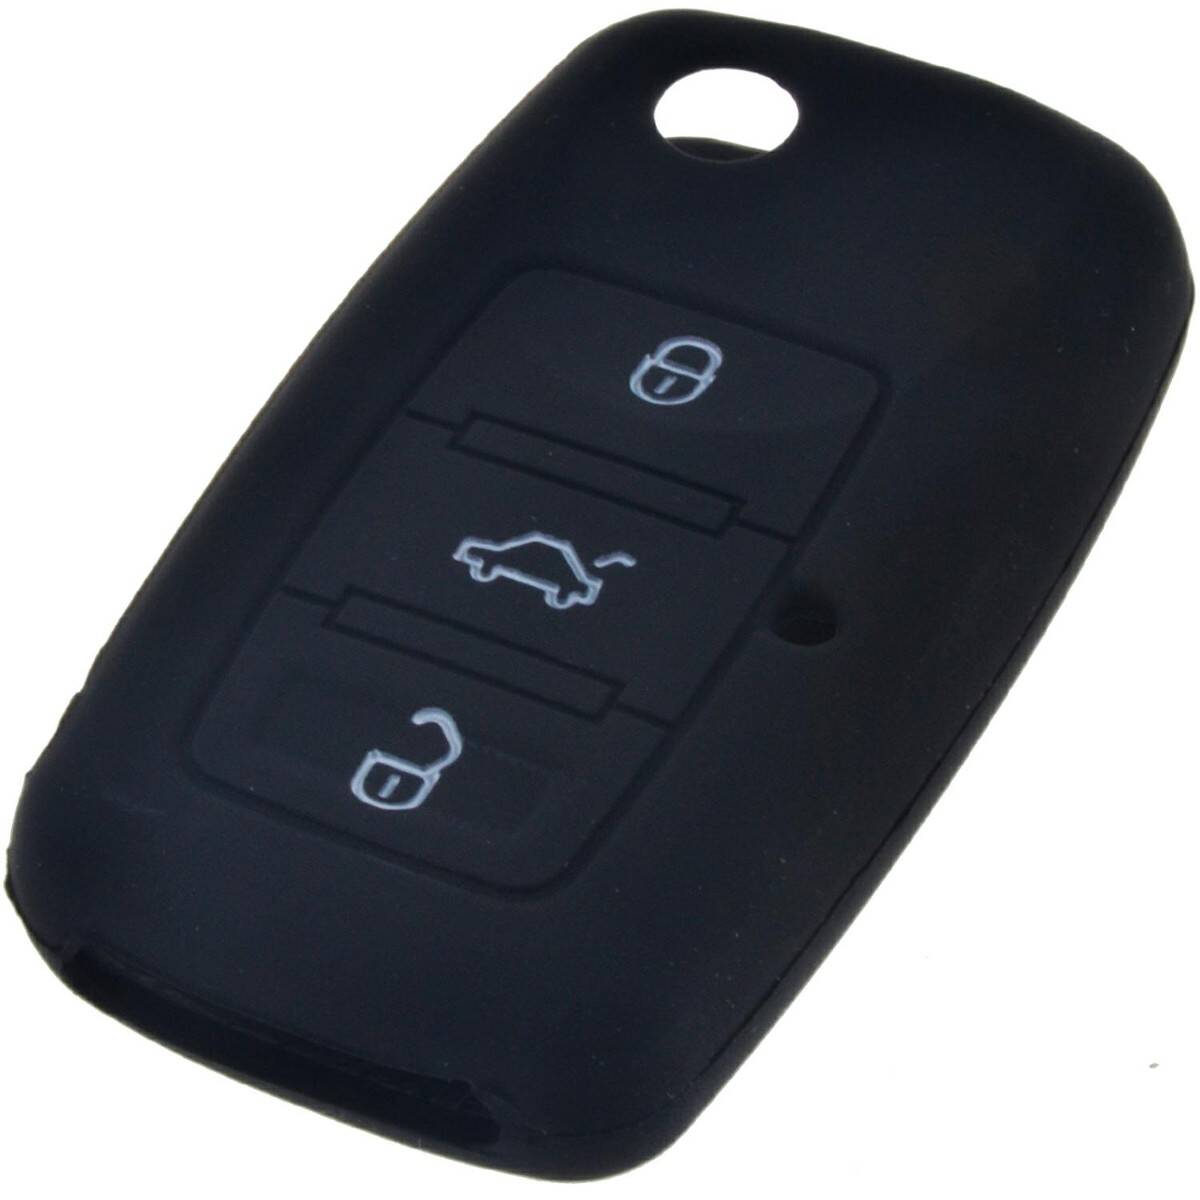 Schlüssel Hülle Silikon Autoschlüssel Gehäuse Für Skoda Octavia